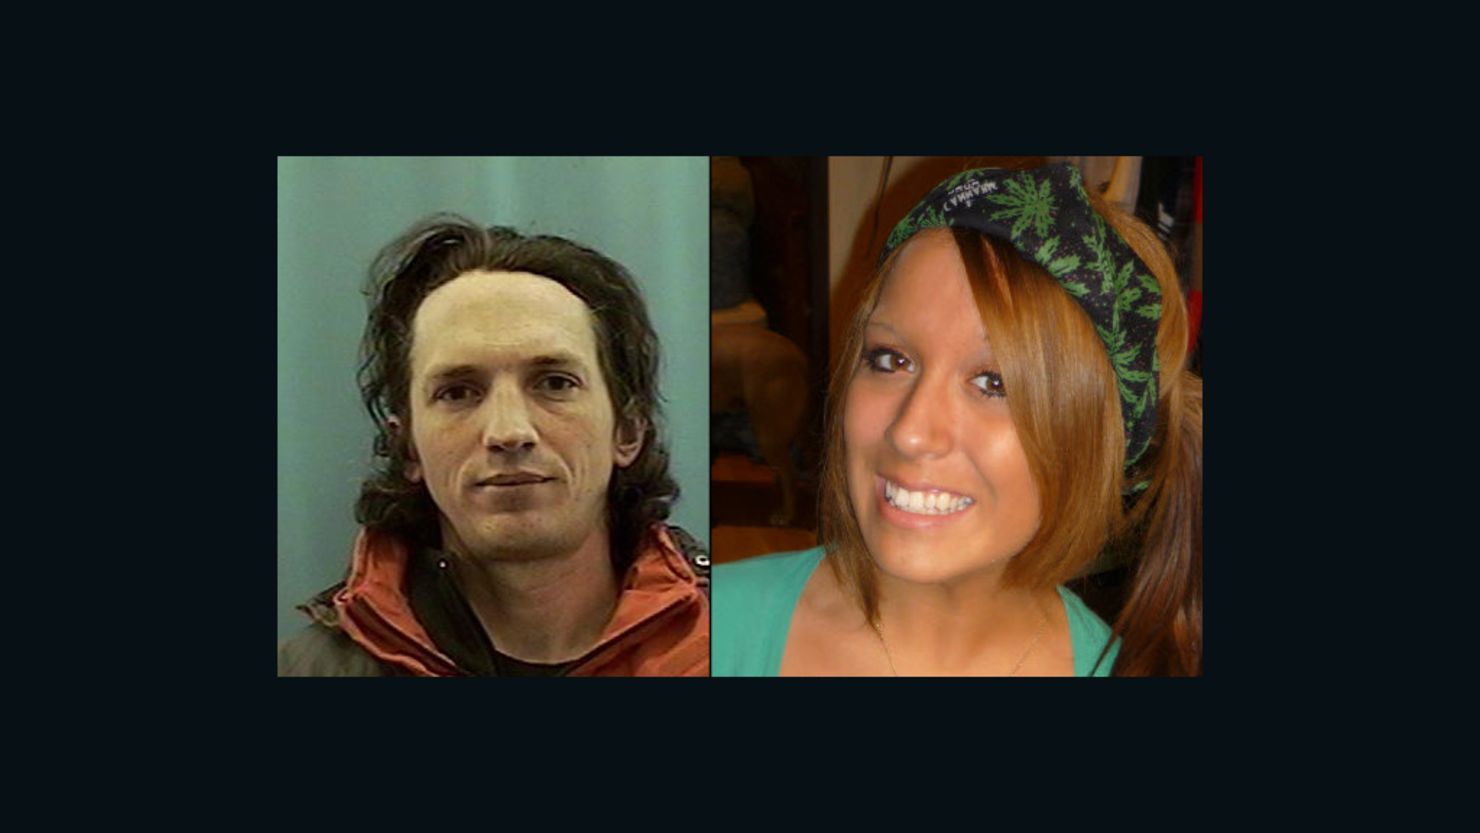 Israel Keyes confessed to killing Samantha Koenig in Alaska in February.